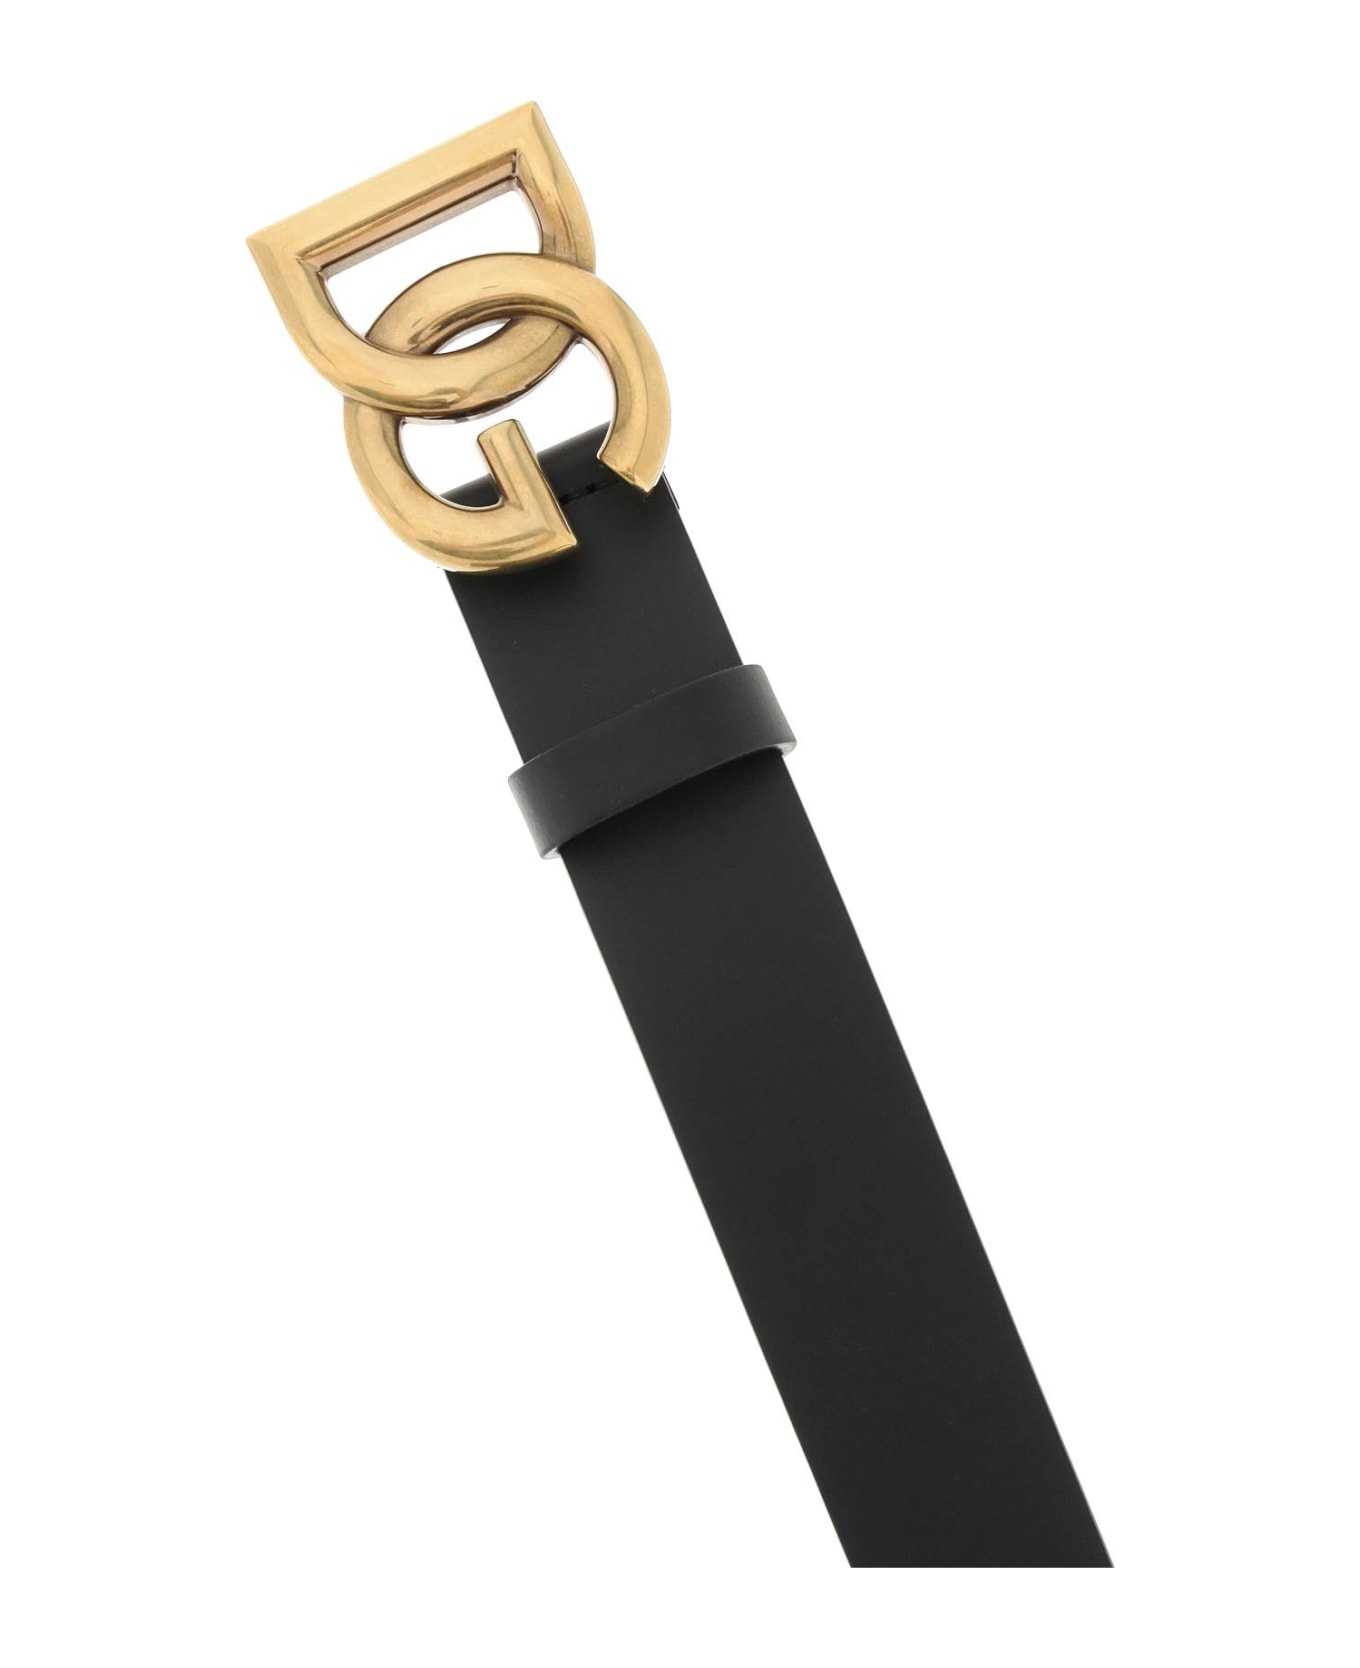 Dolce & Gabbana Lux Leather Belt With Crossed Dg Logo - Black